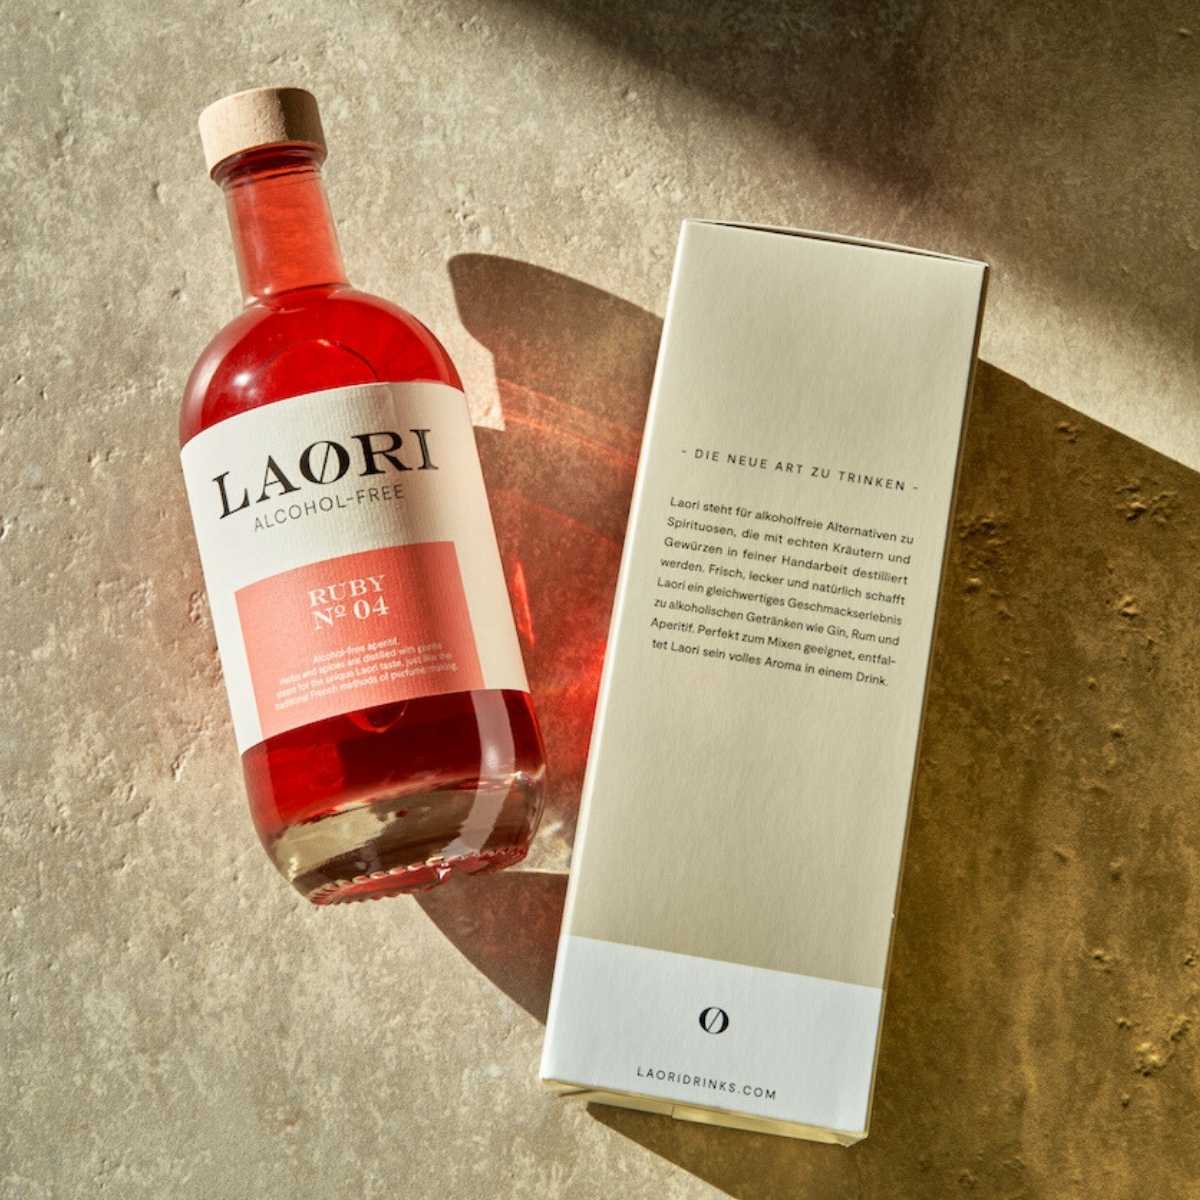 Laori Ruby No 04 (0.5l) in a stylish gift box